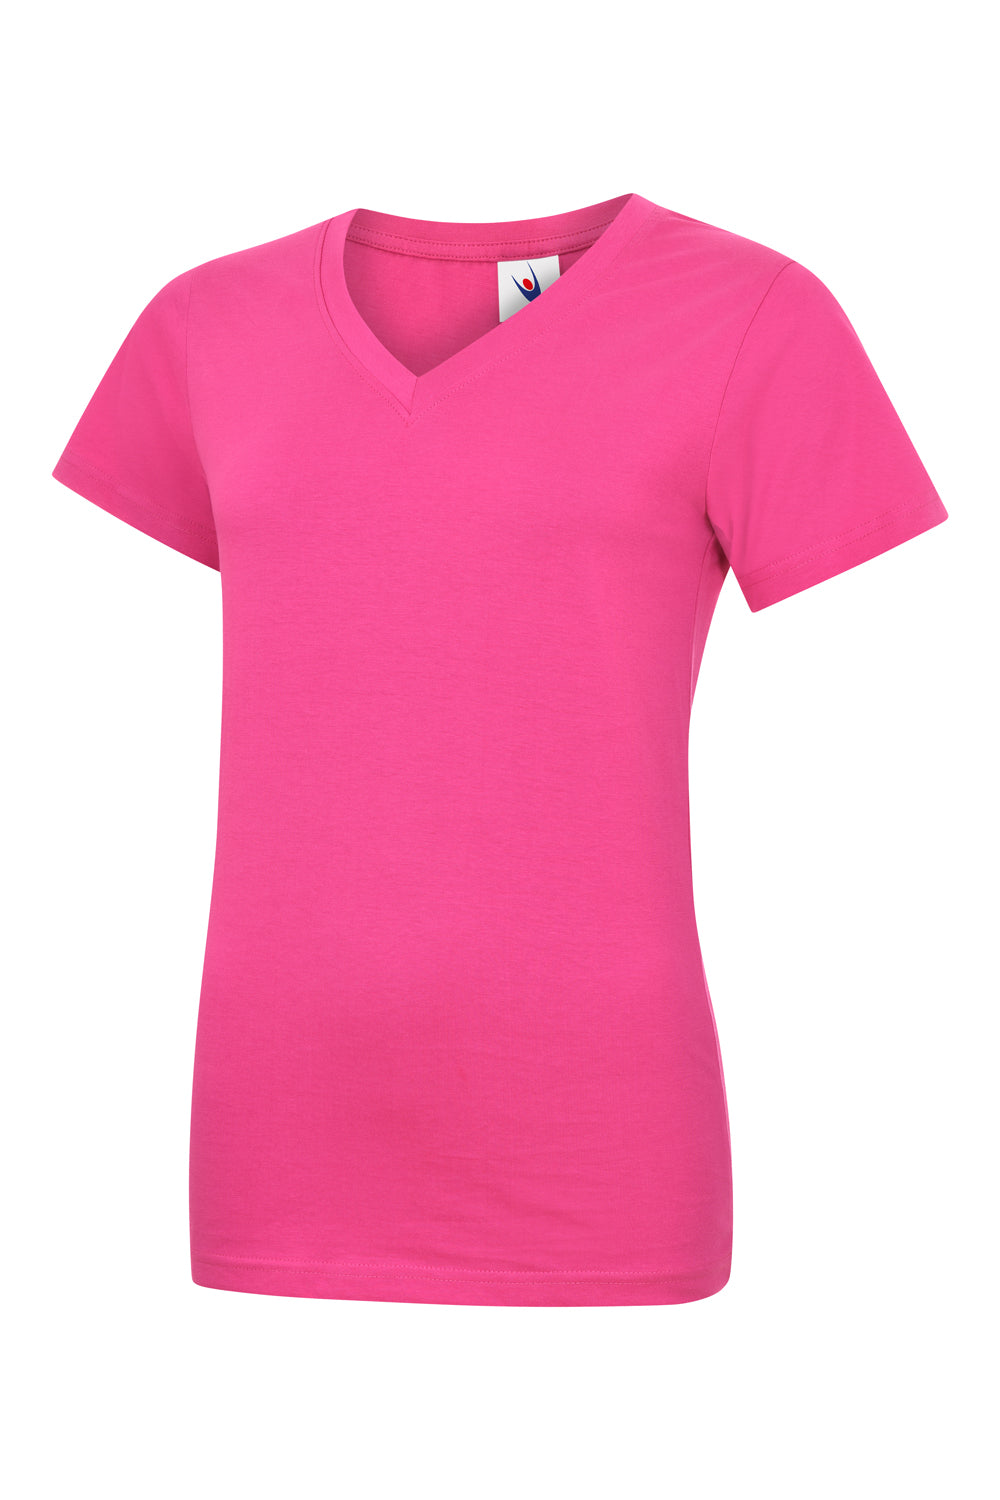 Uneek Ladies Classic V Neck T Shirt UC319 - Hot Pink